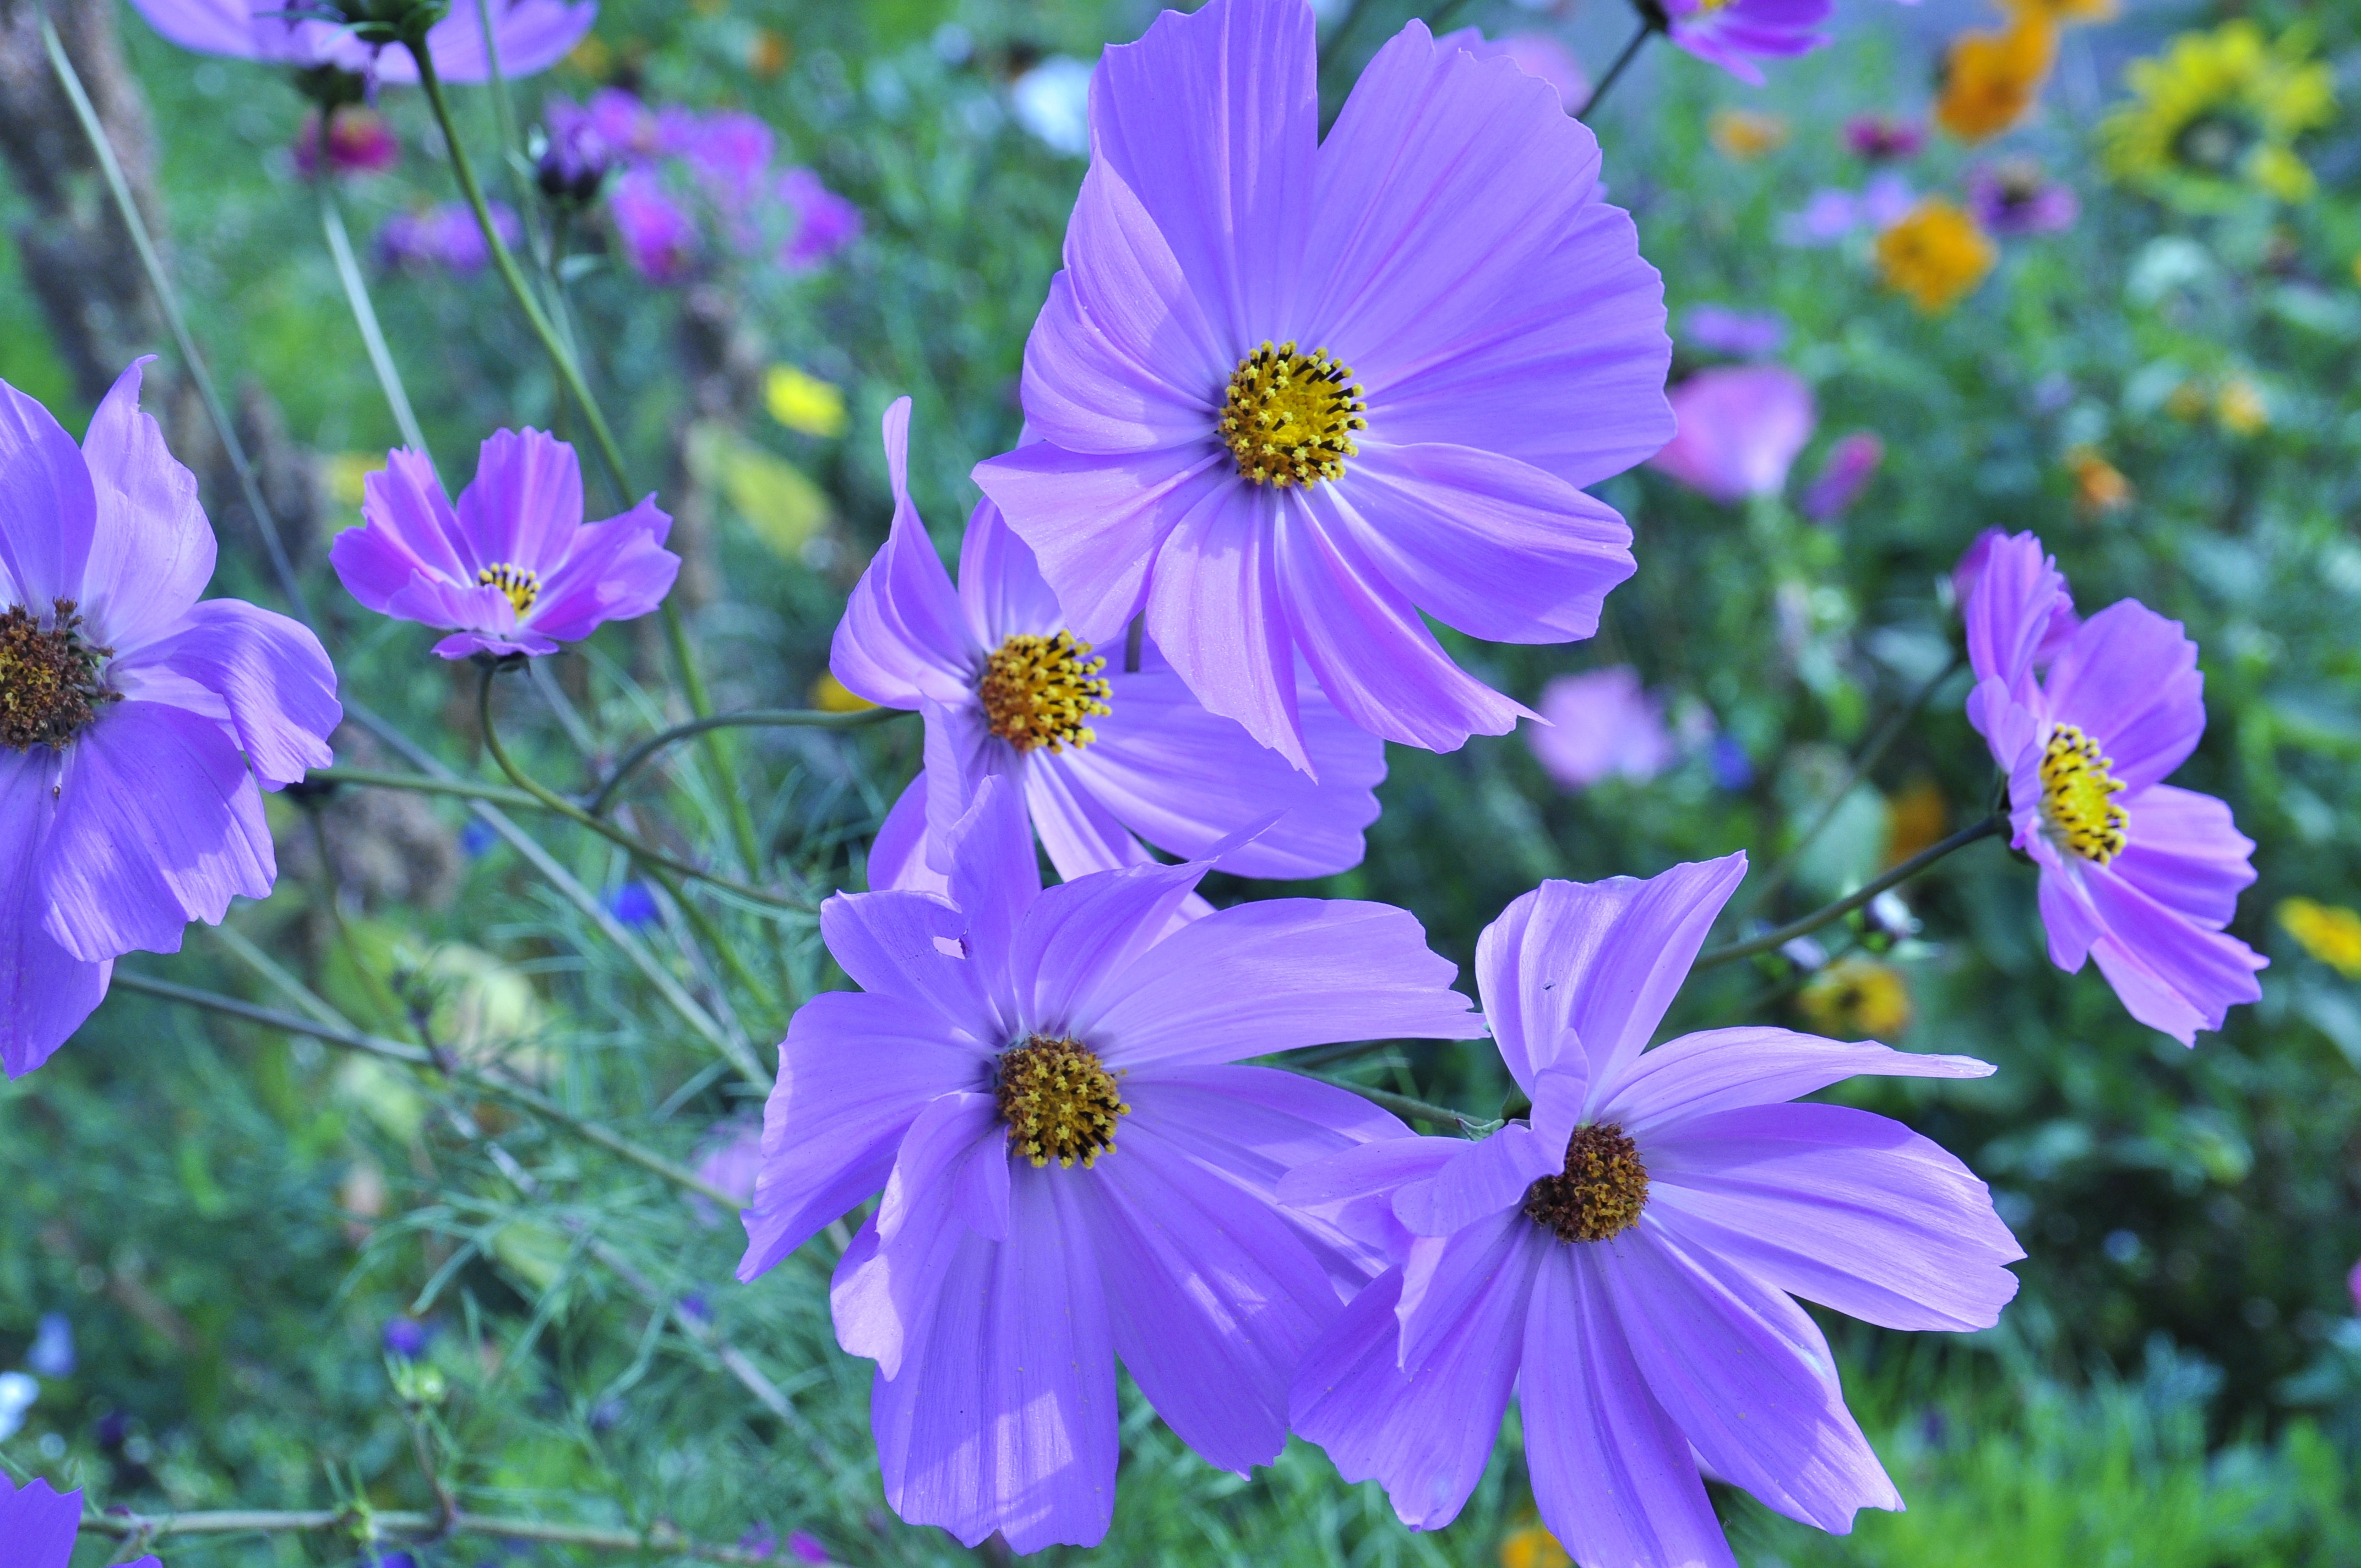 purple cosmos flower